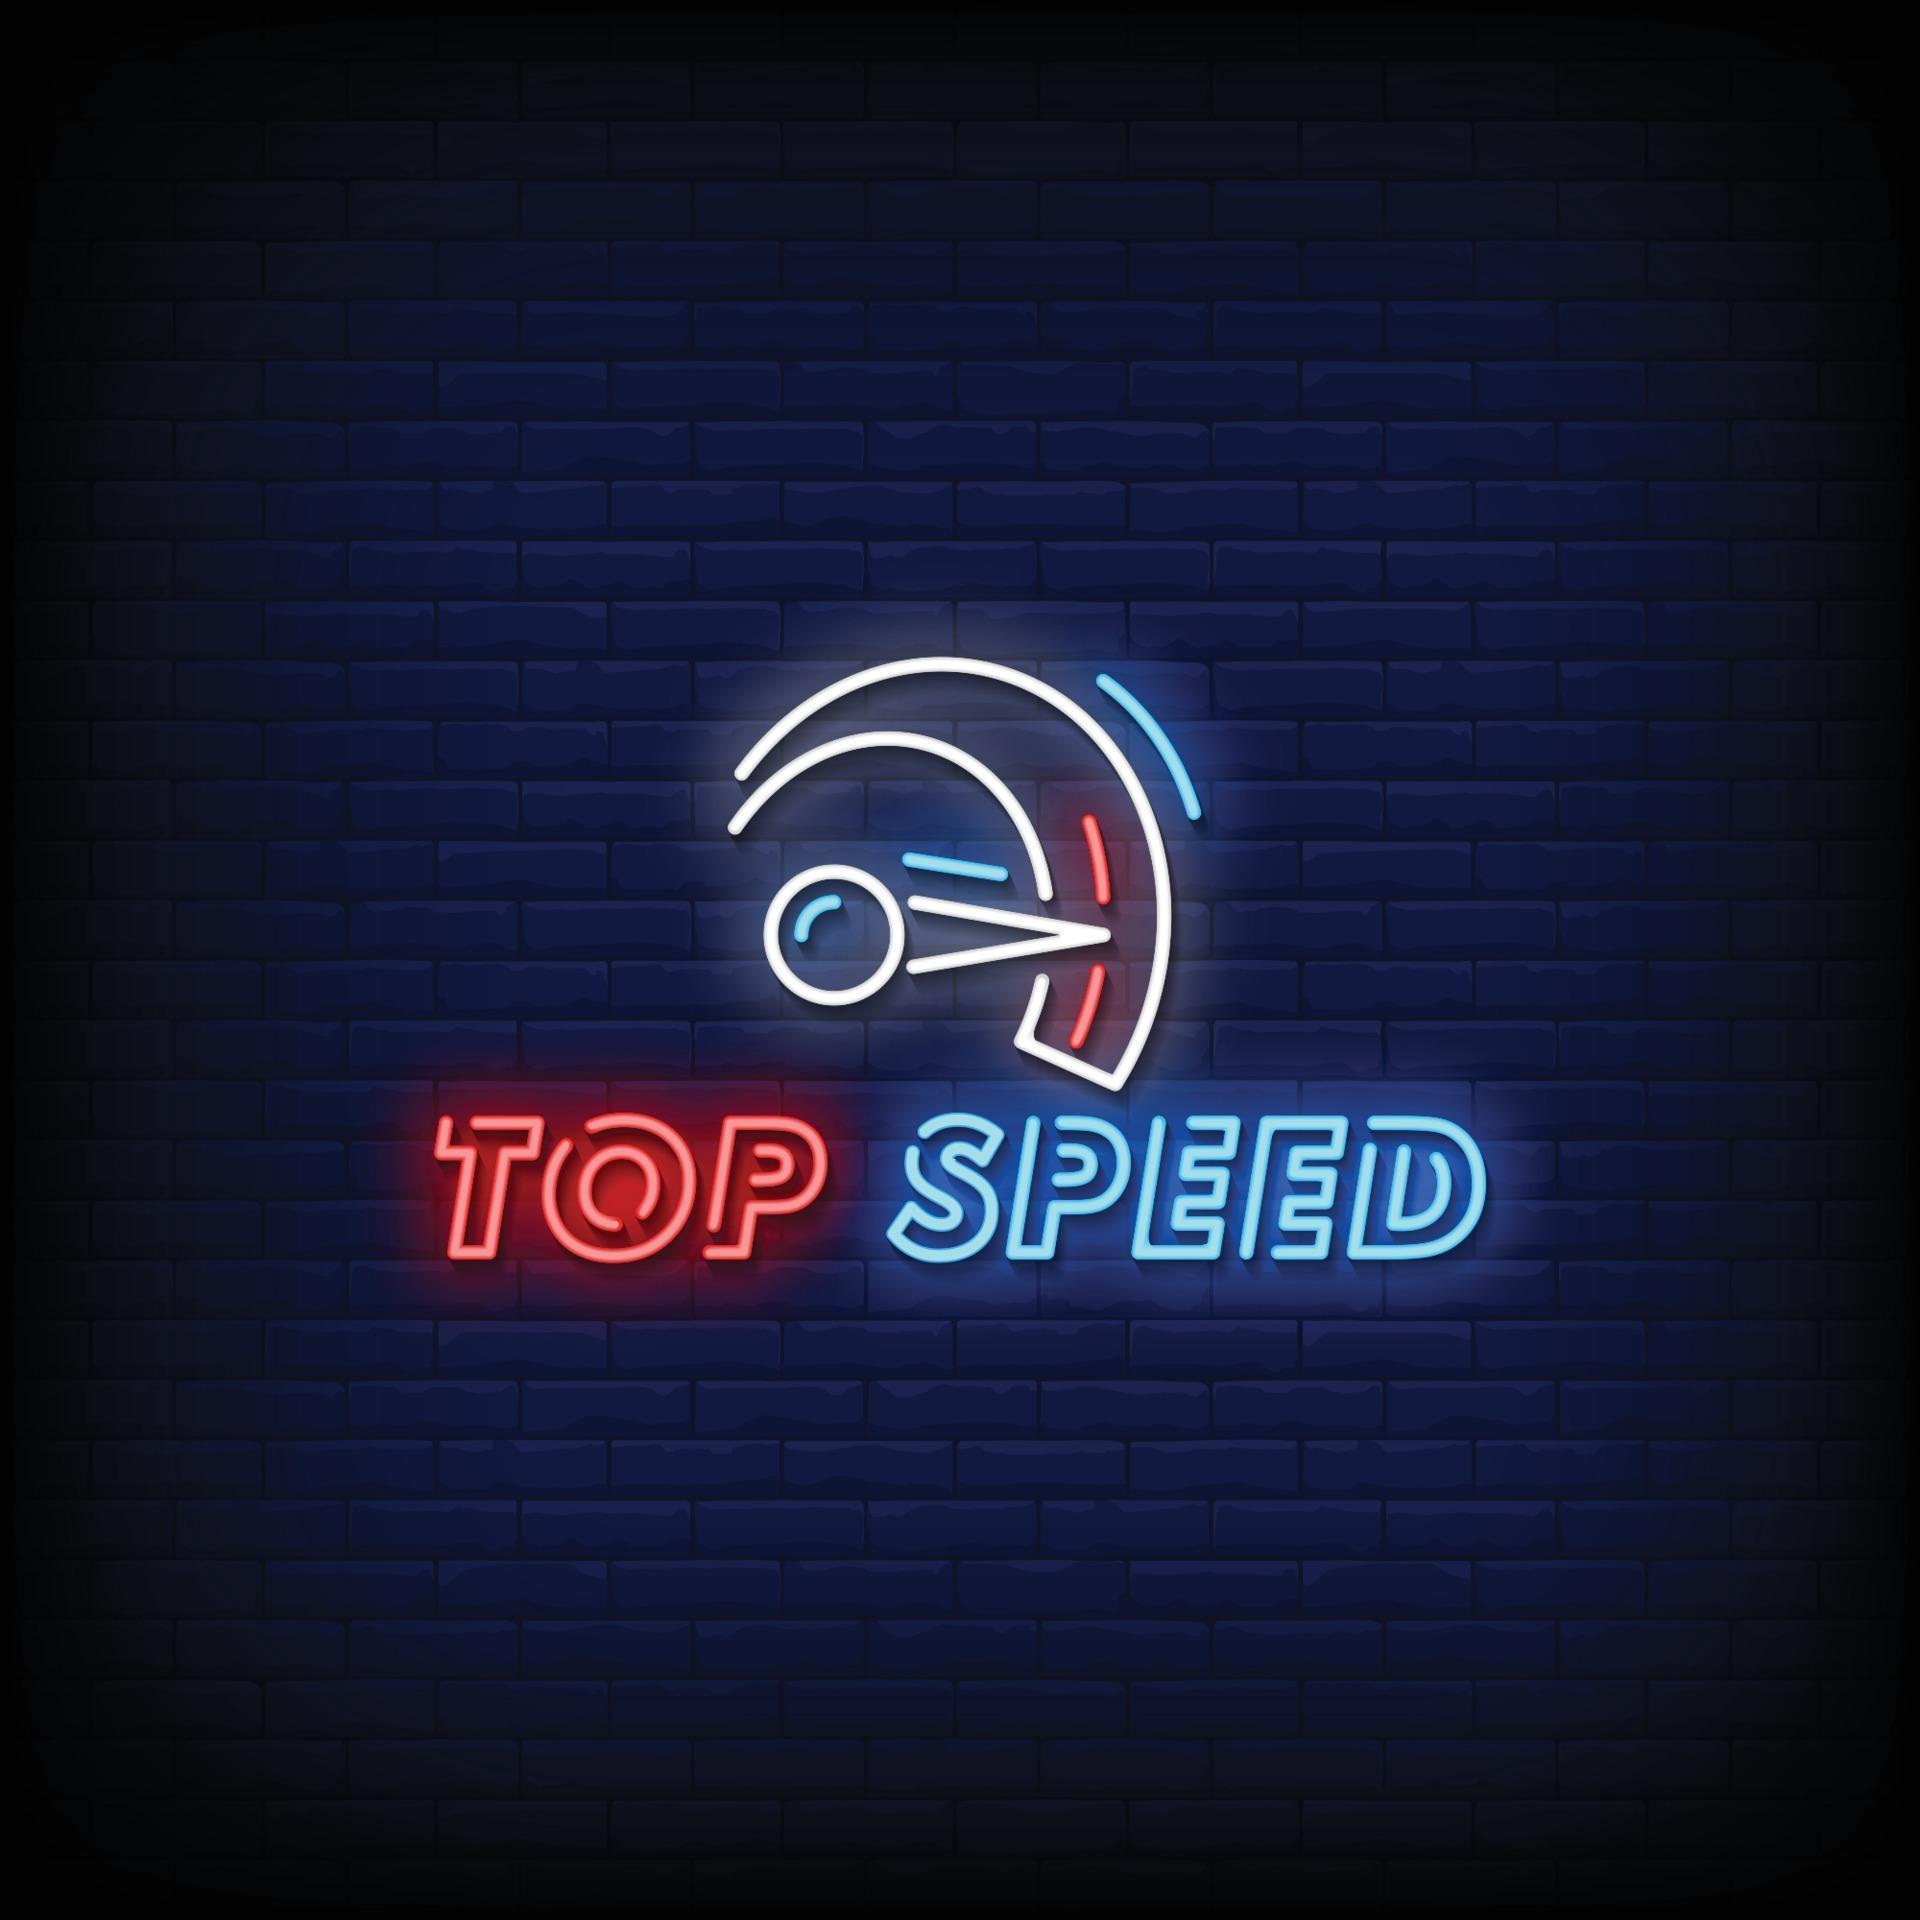 Top Speed  Neon Signs Style Text Vector 2185725 Vector Art 